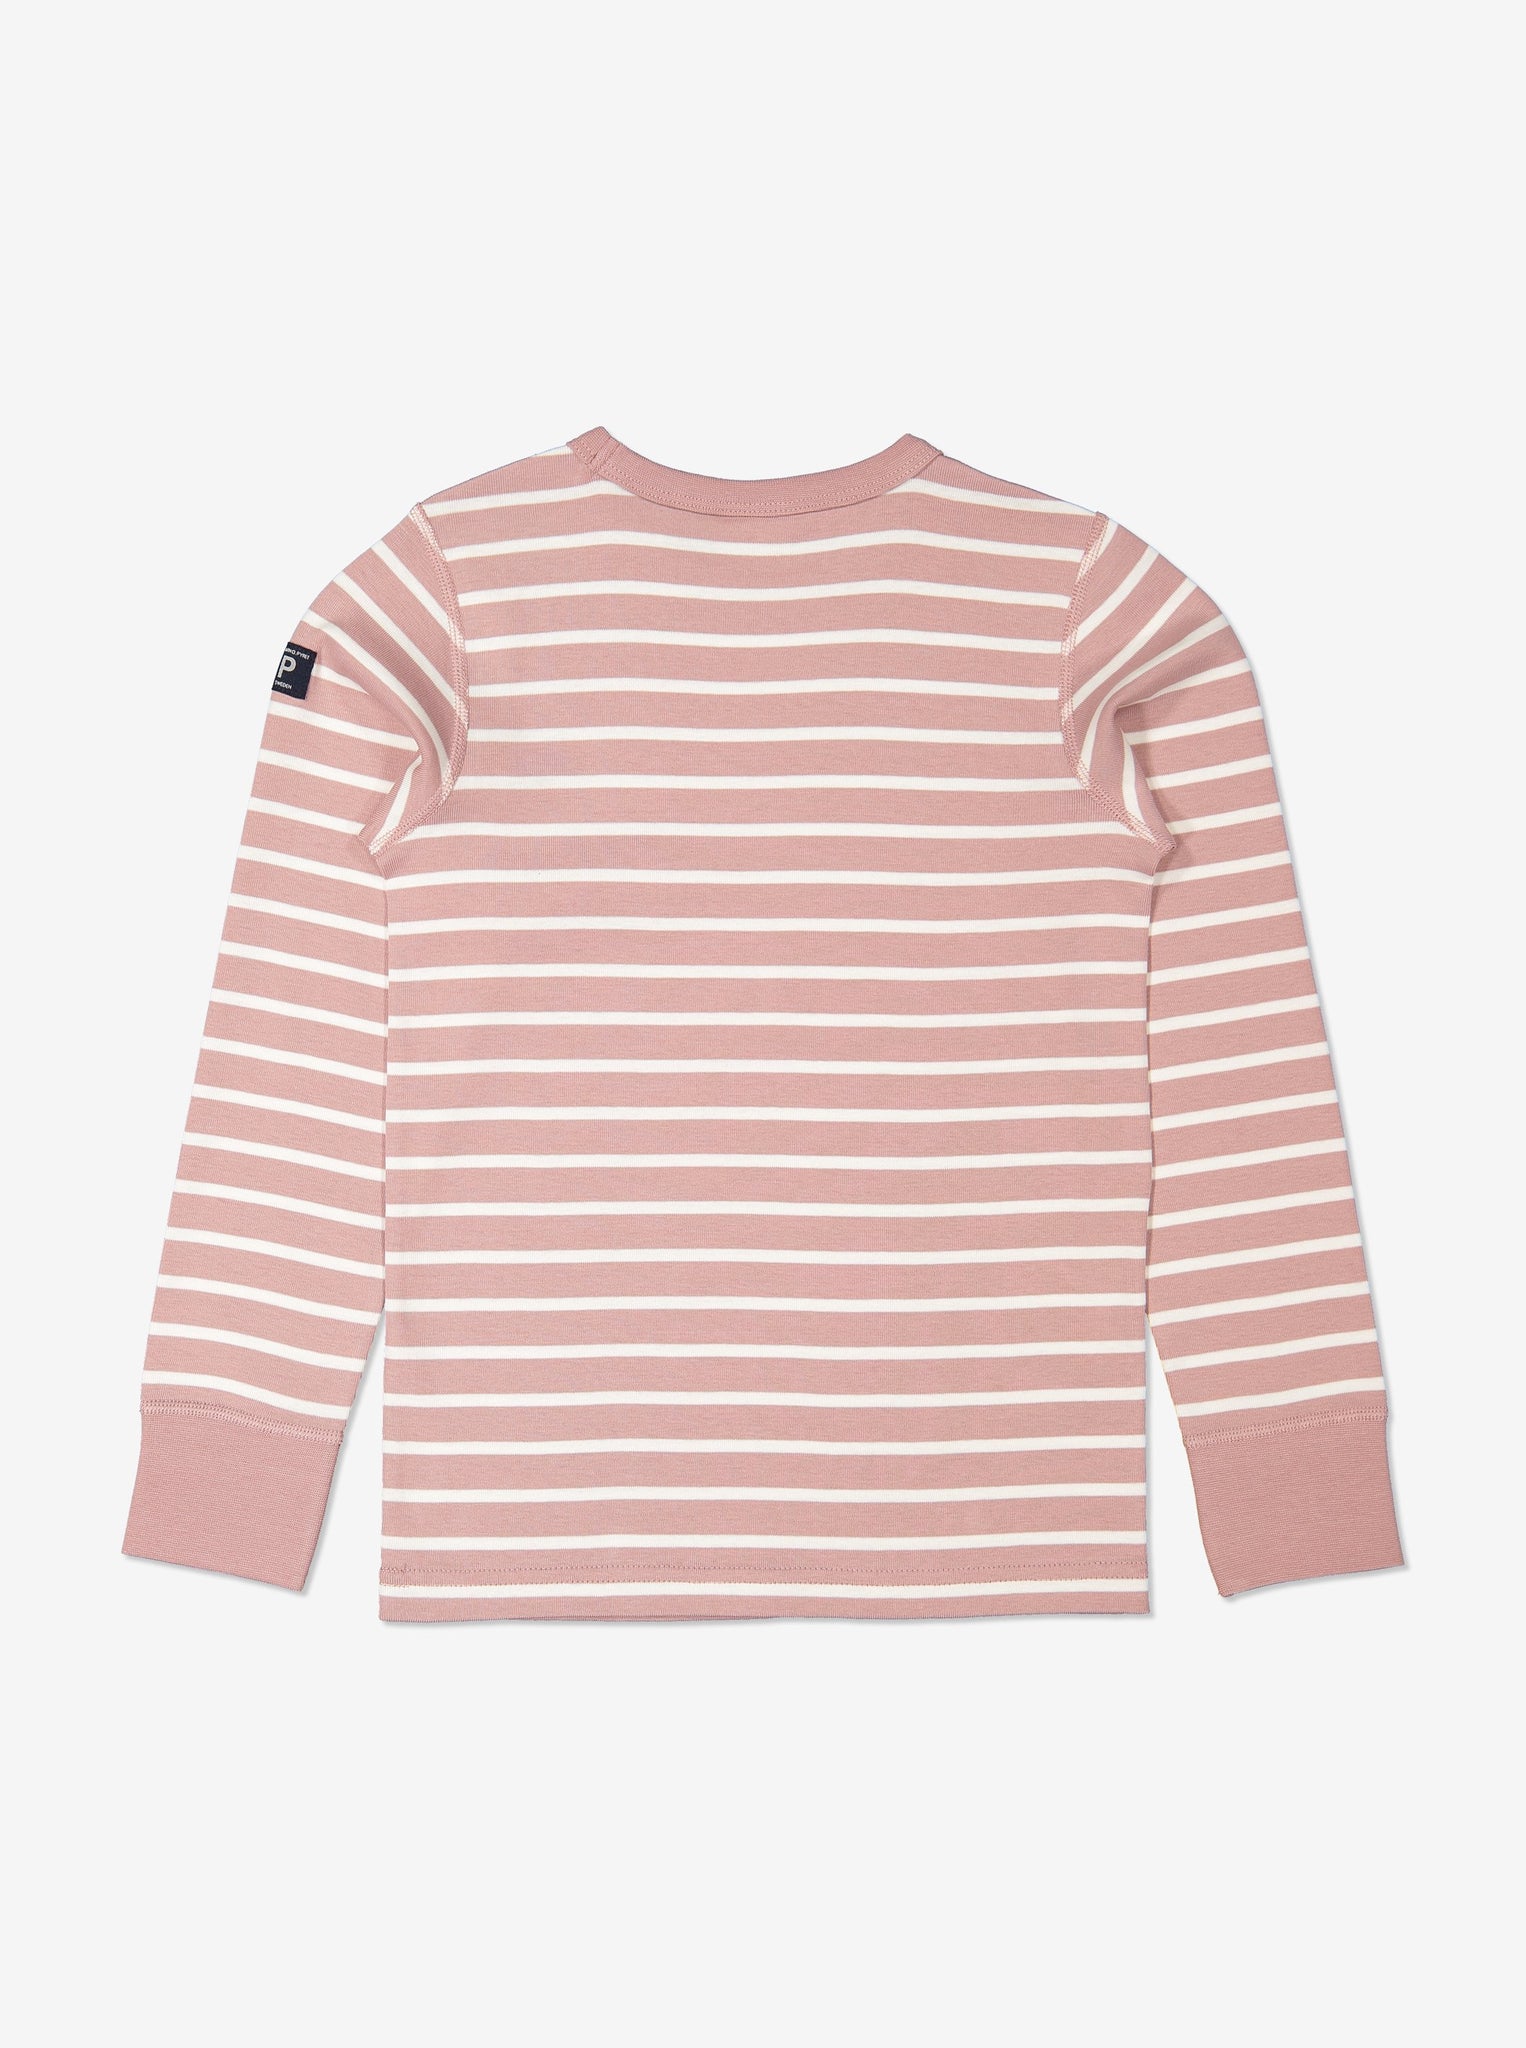 Kids Striped Pink Organic Top